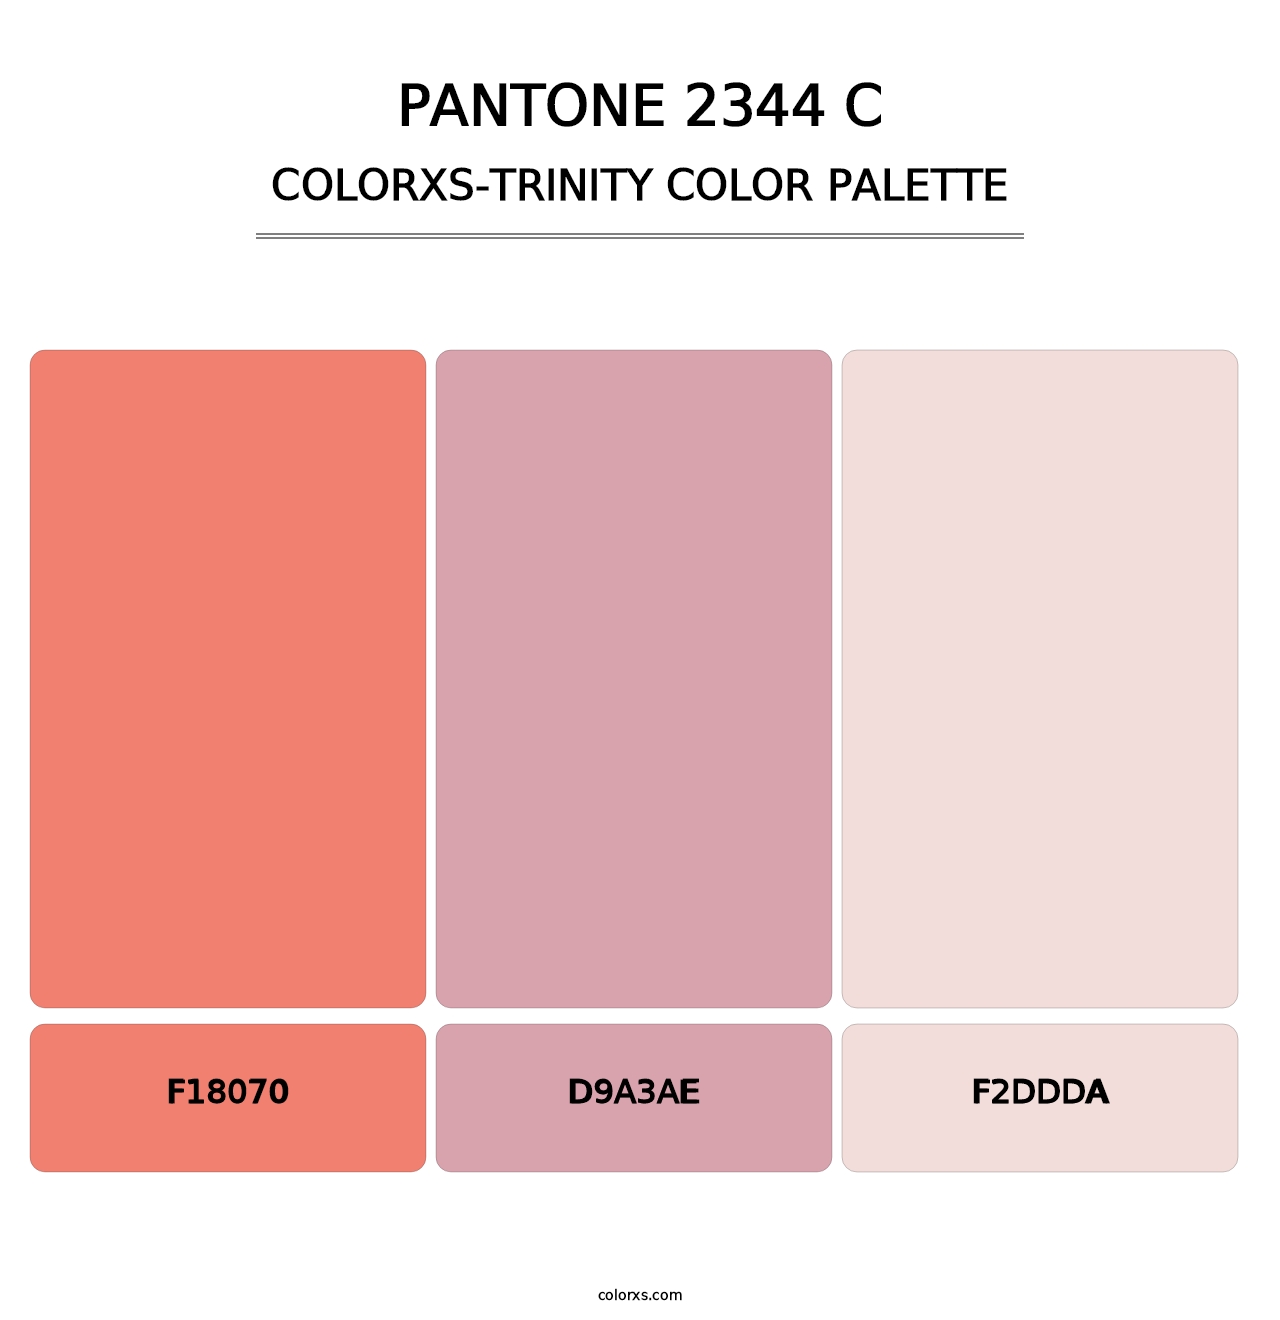 PANTONE 2344 C - Colorxs Trinity Palette